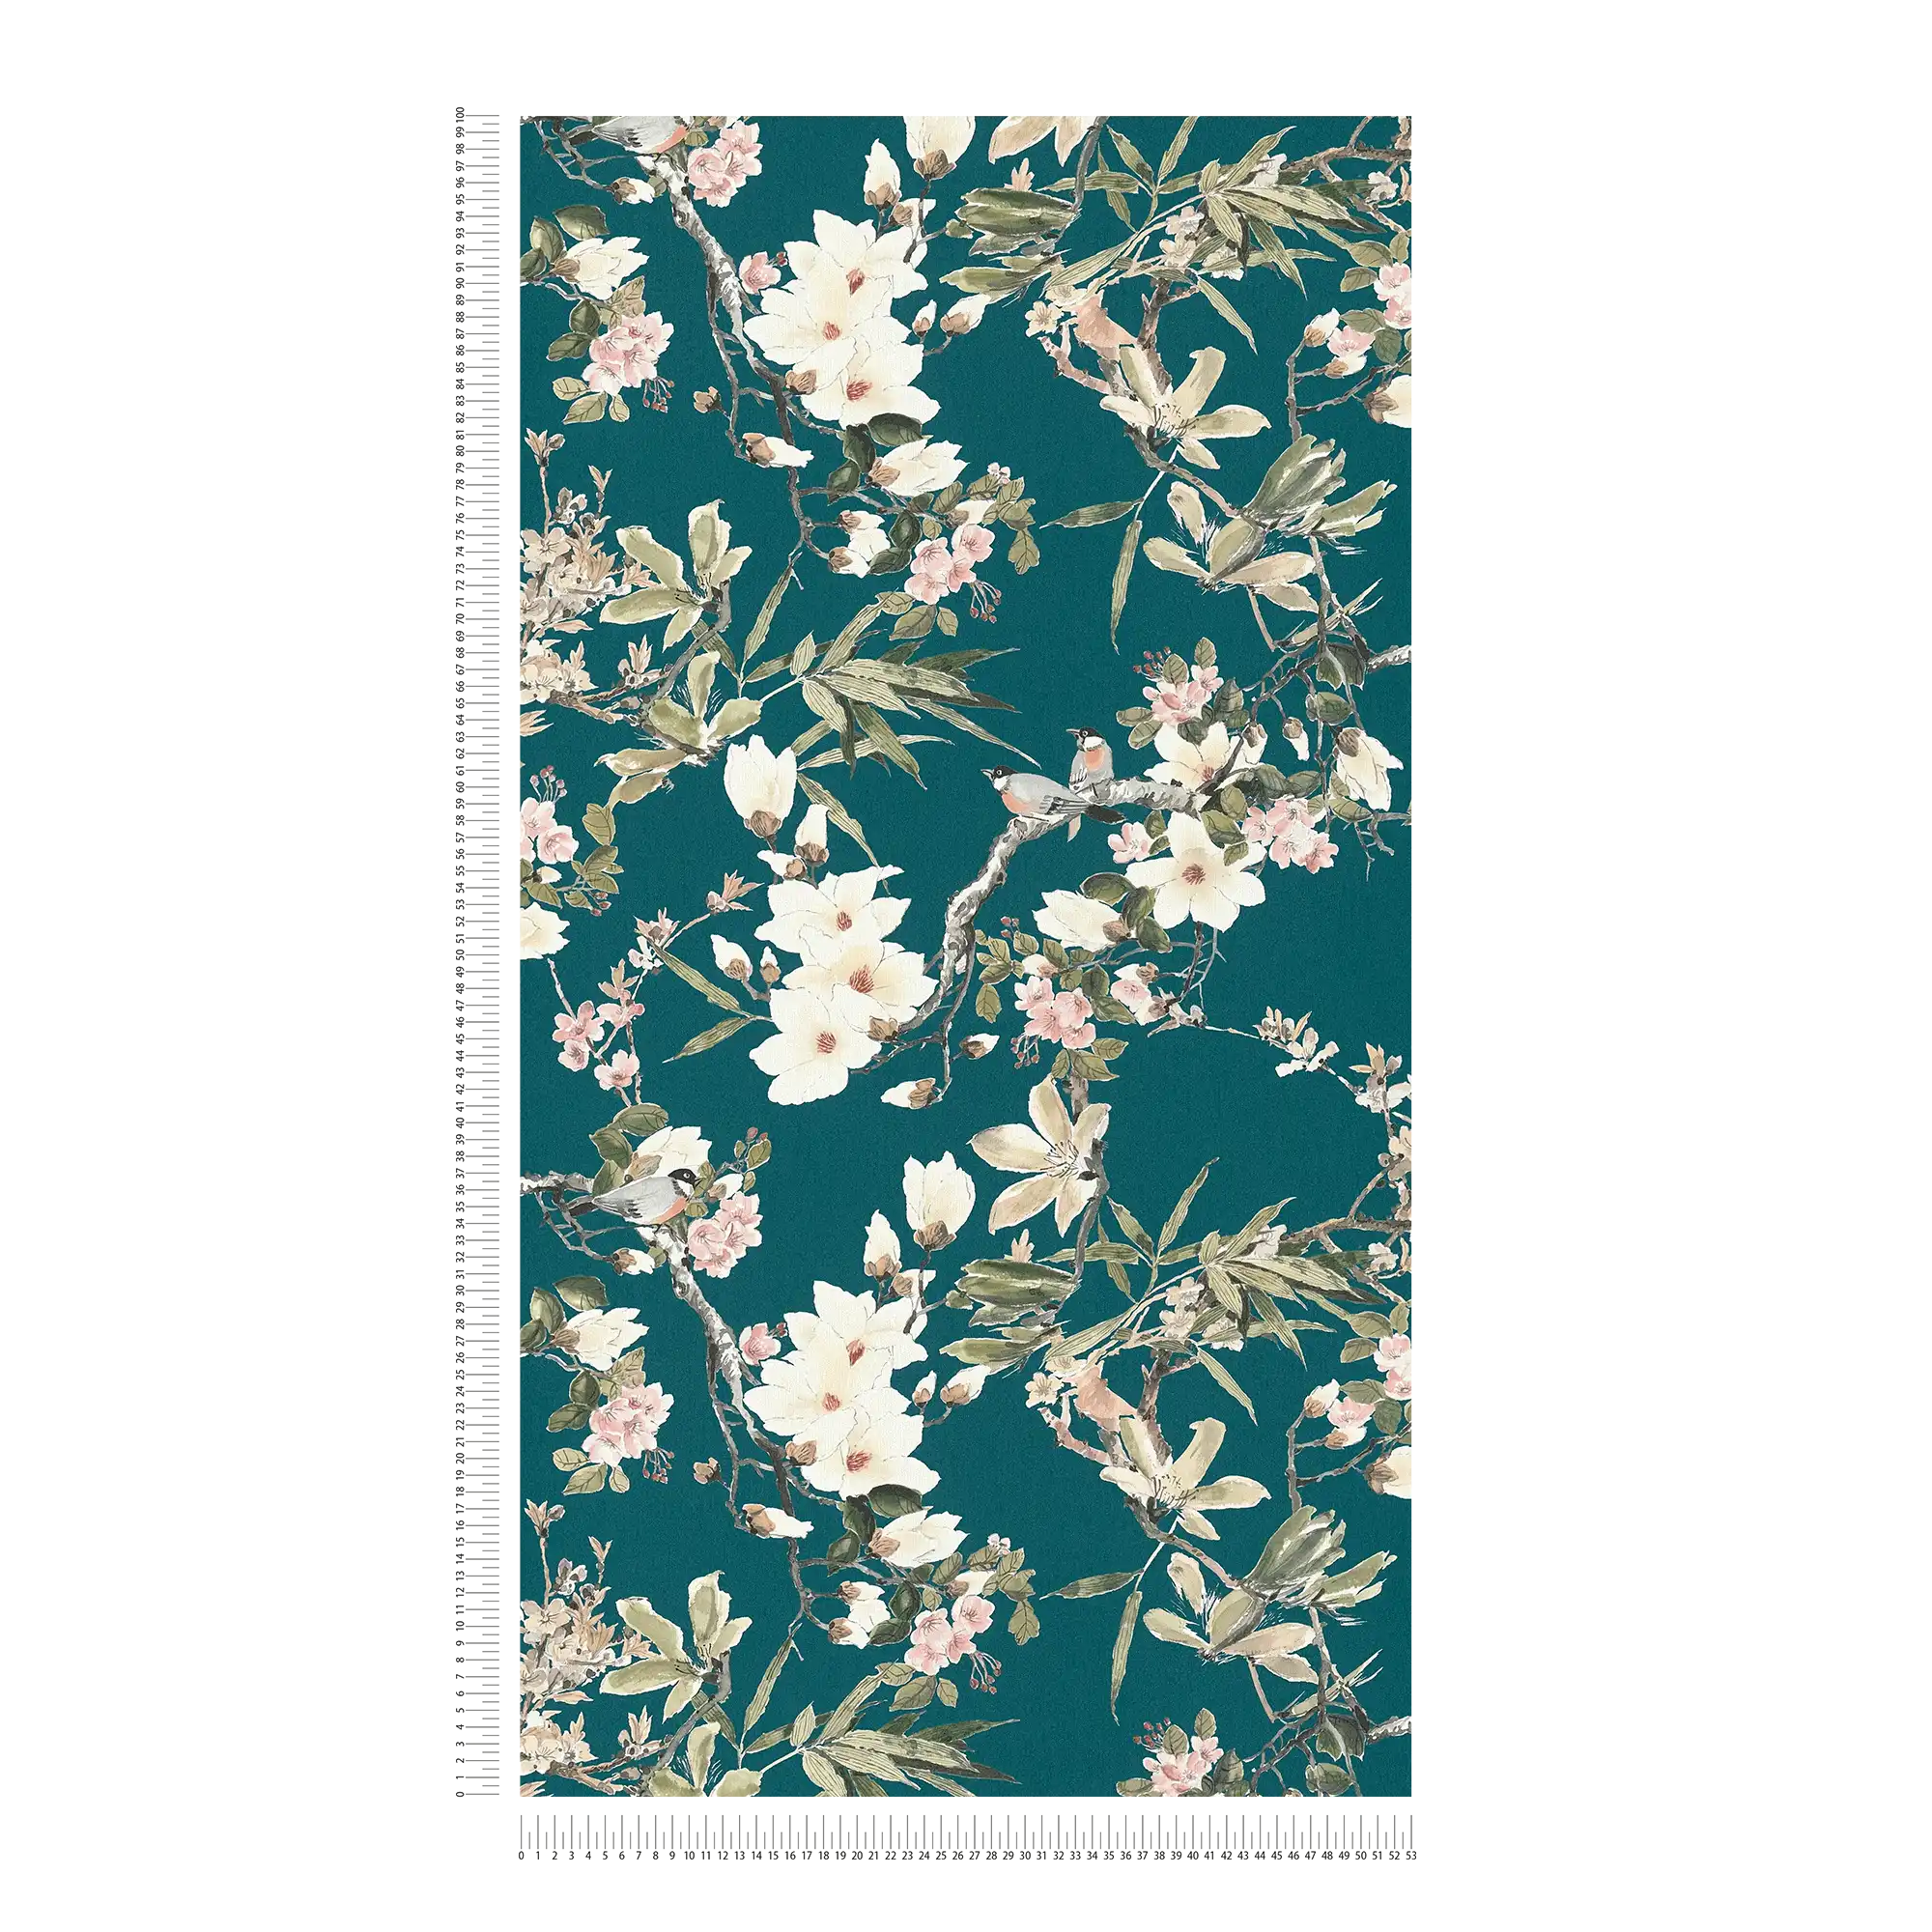             Vliestapete Natur Design Blüten Zweige & Vögel – Blau, Grün
        